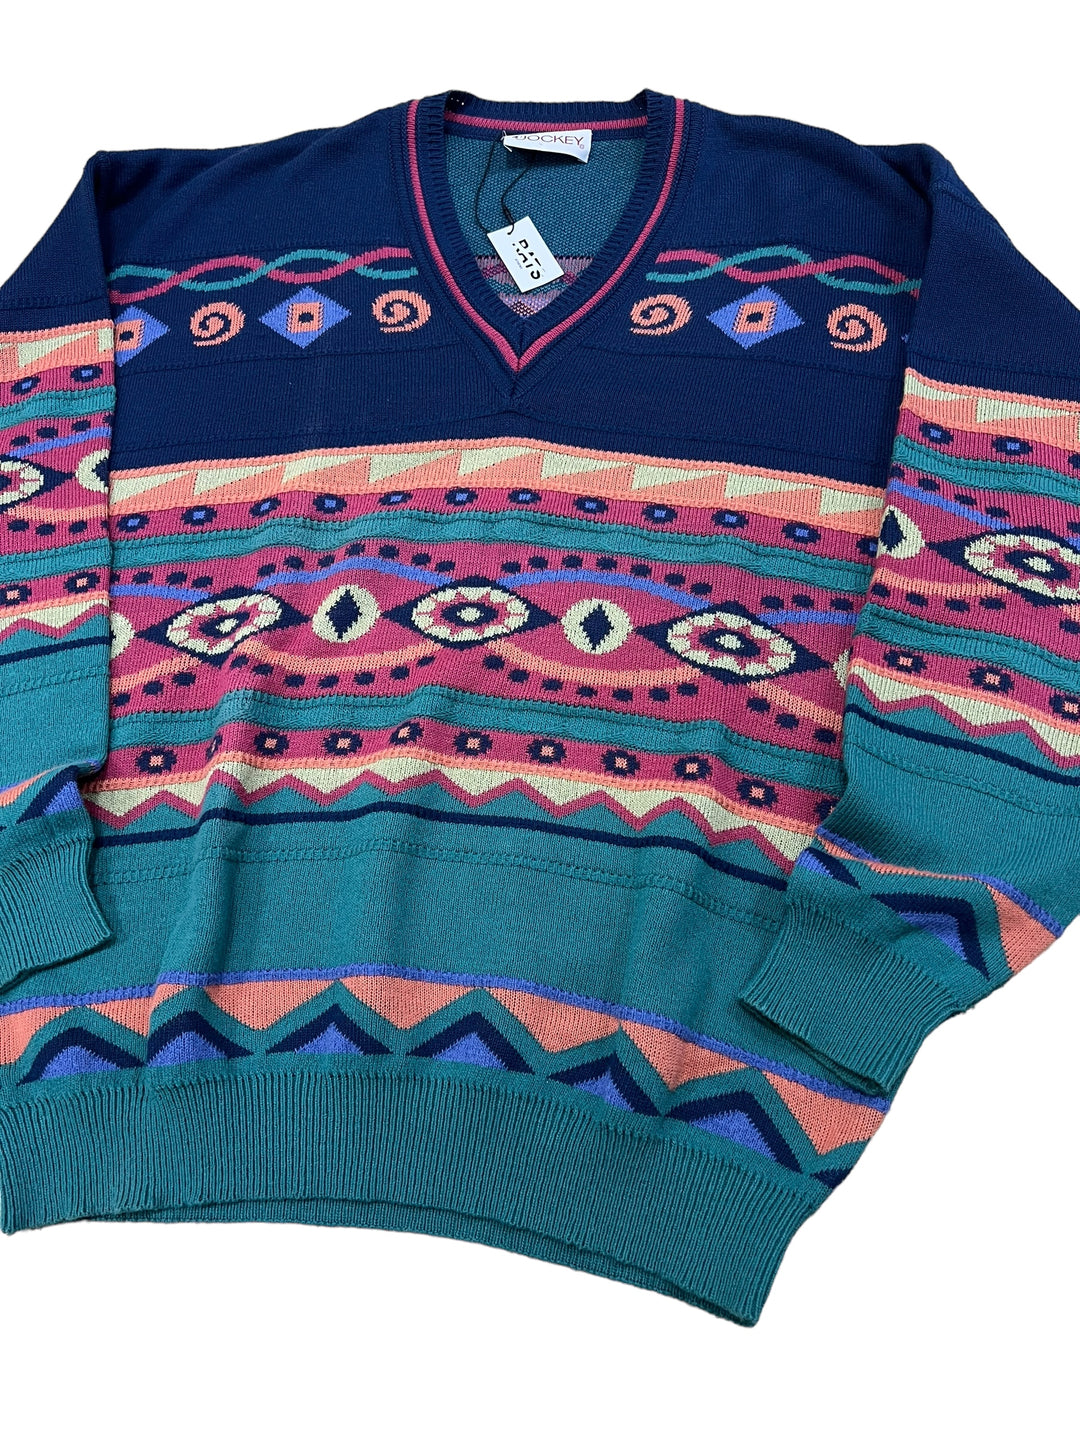 Vintage jockey Sweater Men’s Extra Large